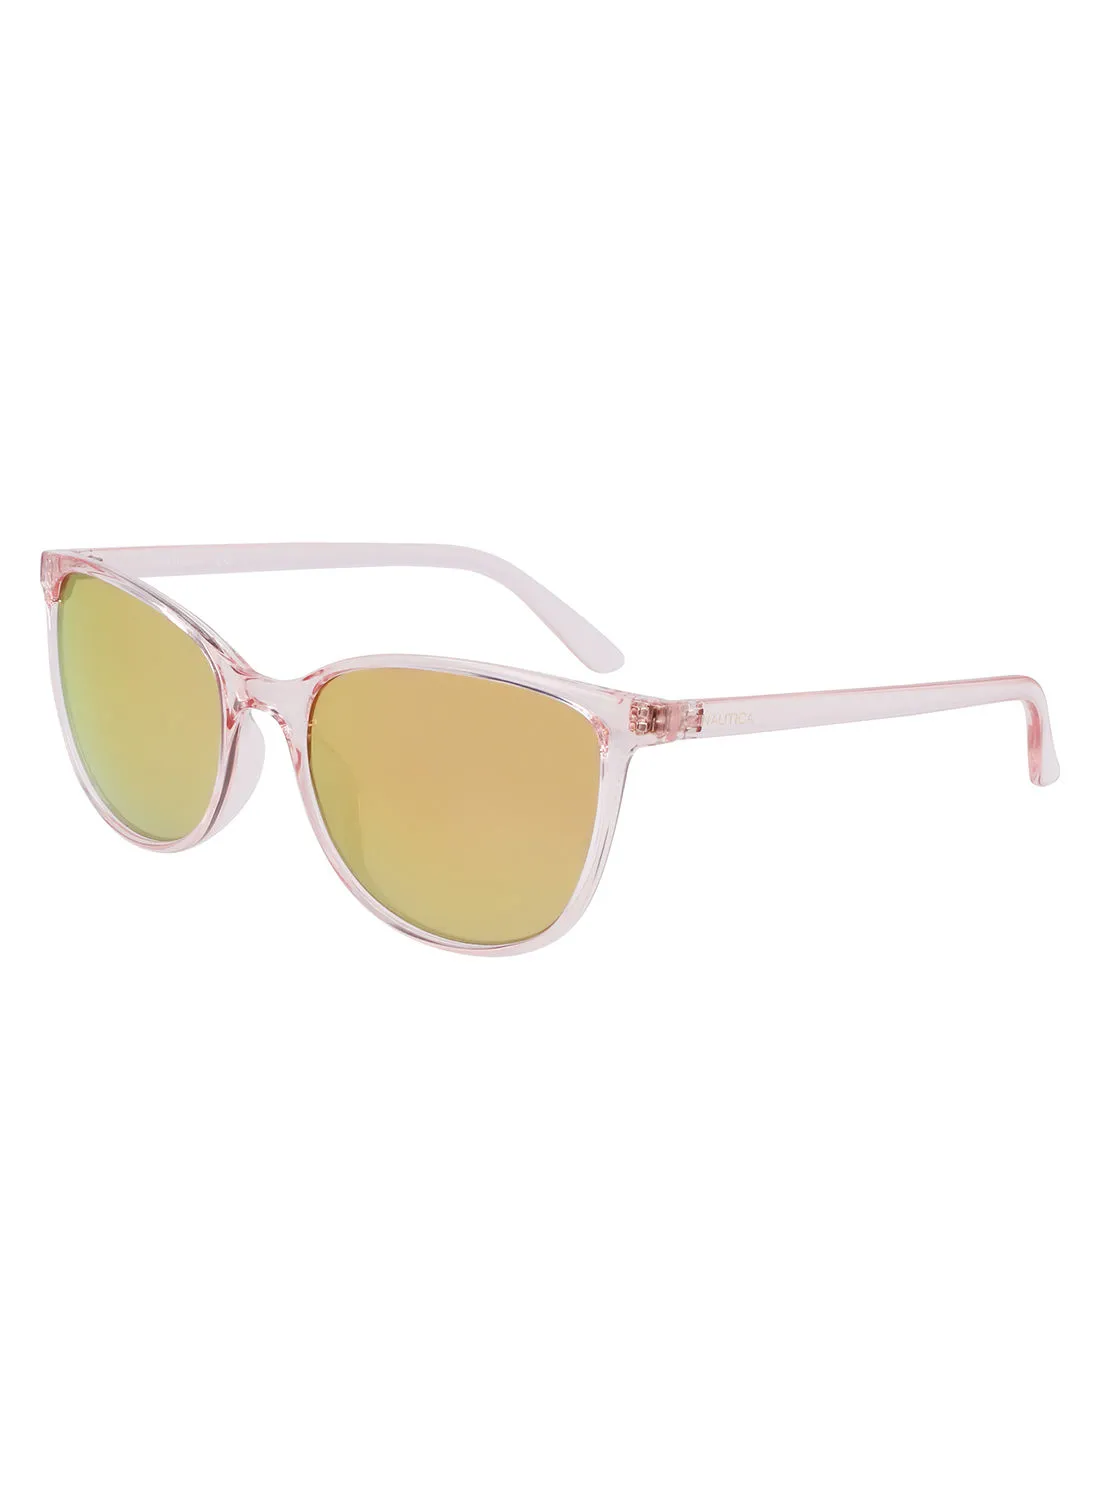 NAUTICA Women's Rectangular Sunglasses - N2243S-662-5618 - Lens Size: 56 Mm